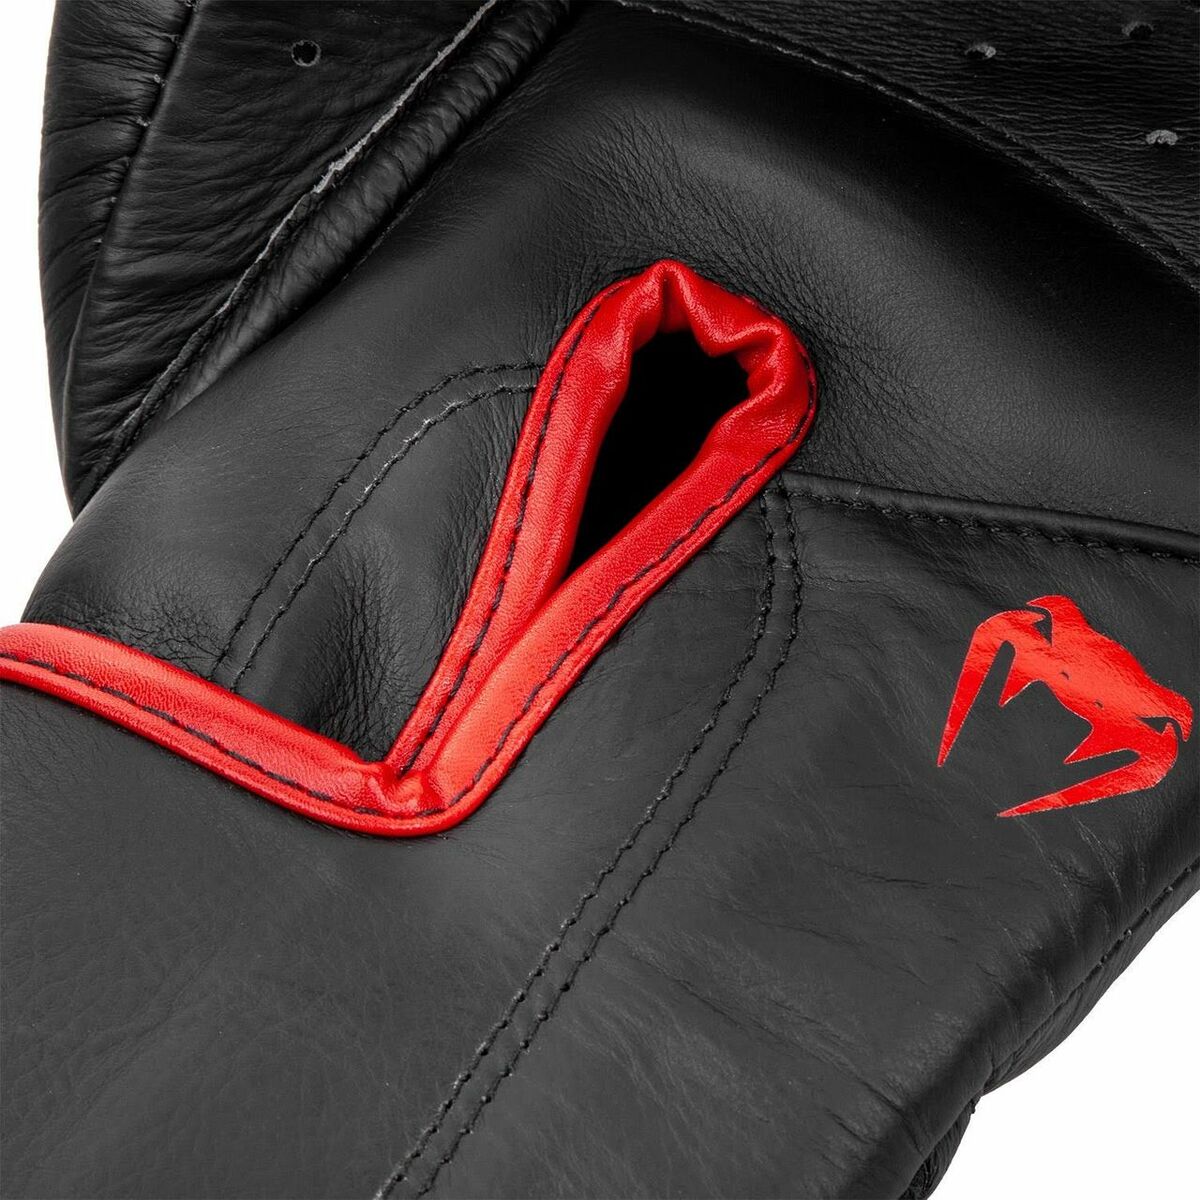 Venum Giant 2.0 Pro Boxing Gloves Black/Red